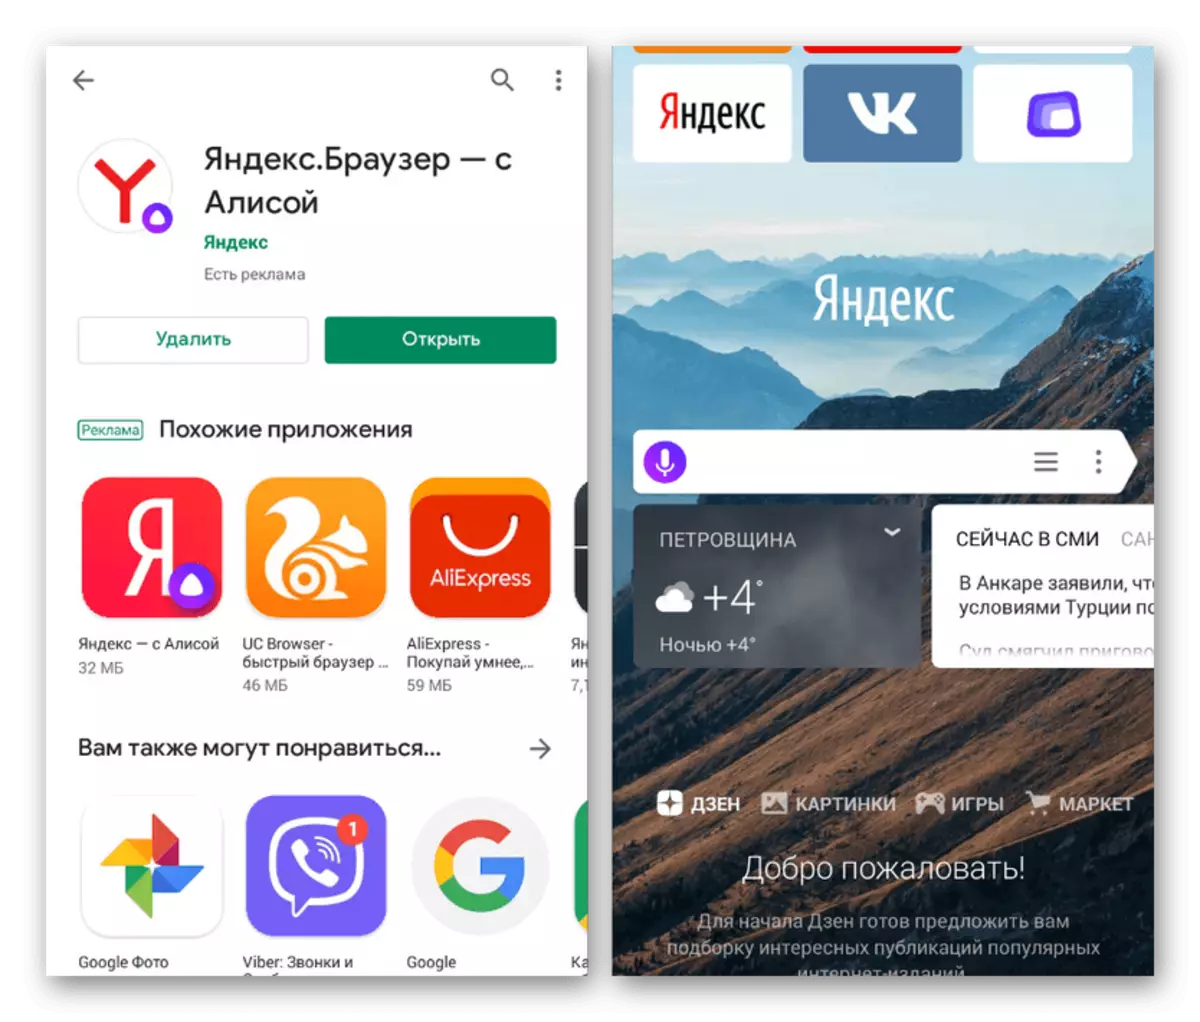 Sample Yandex Startpagina yn Yandex.Browsner